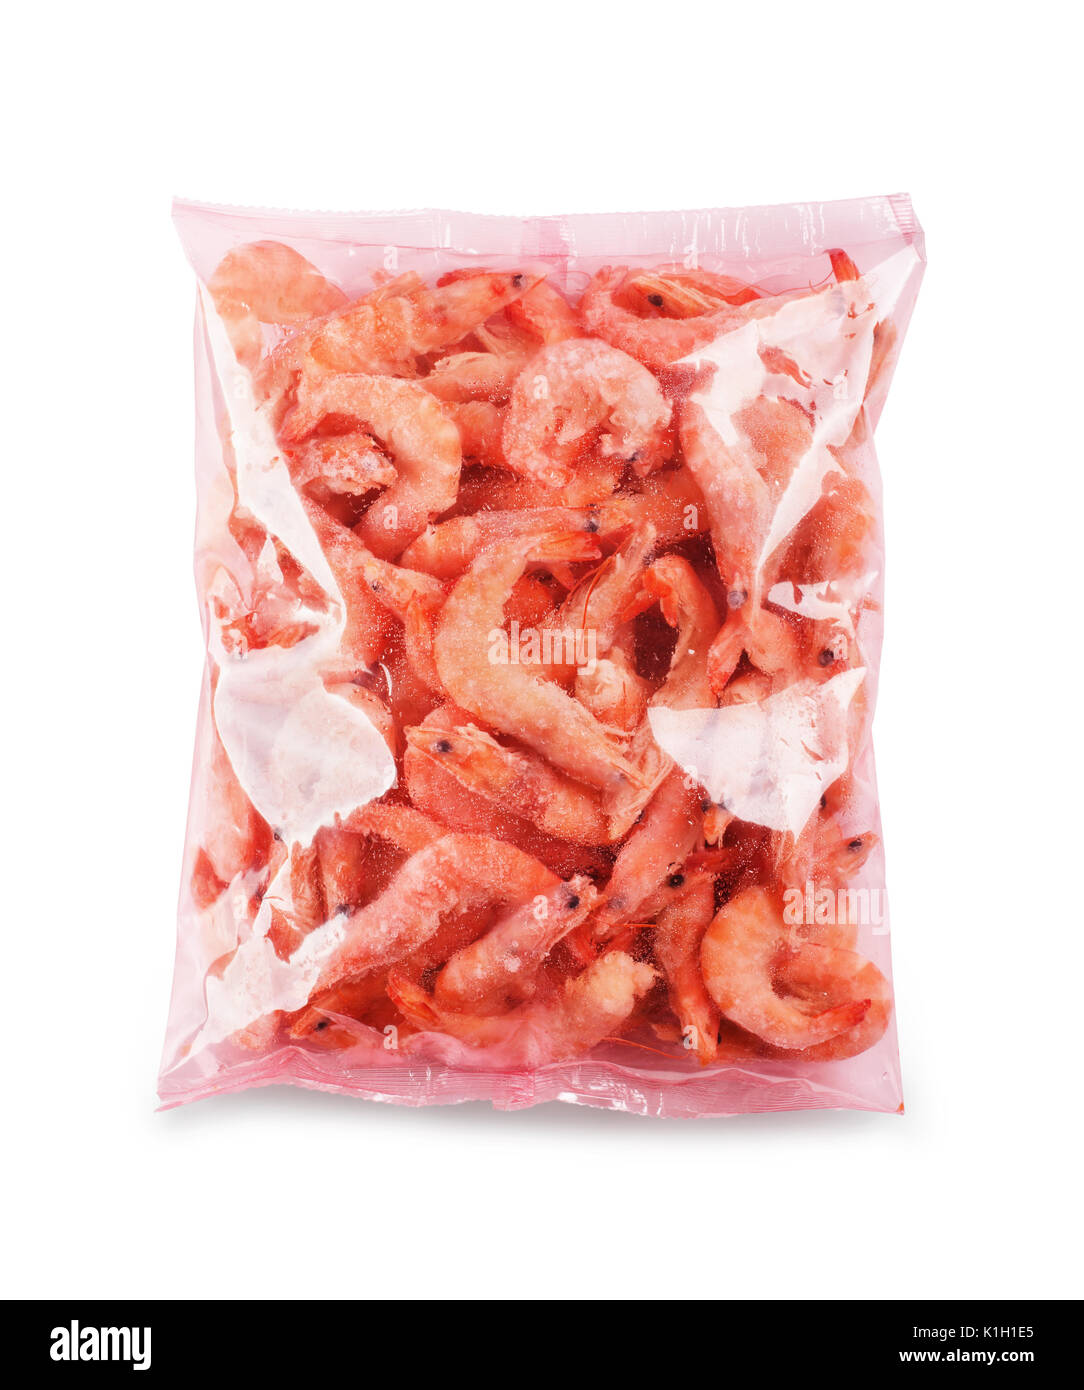 https://c8.alamy.com/comp/K1H1E5/frozen-shrimp-or-prawn-in-plastic-package-isolated-on-a-white-background-K1H1E5.jpg